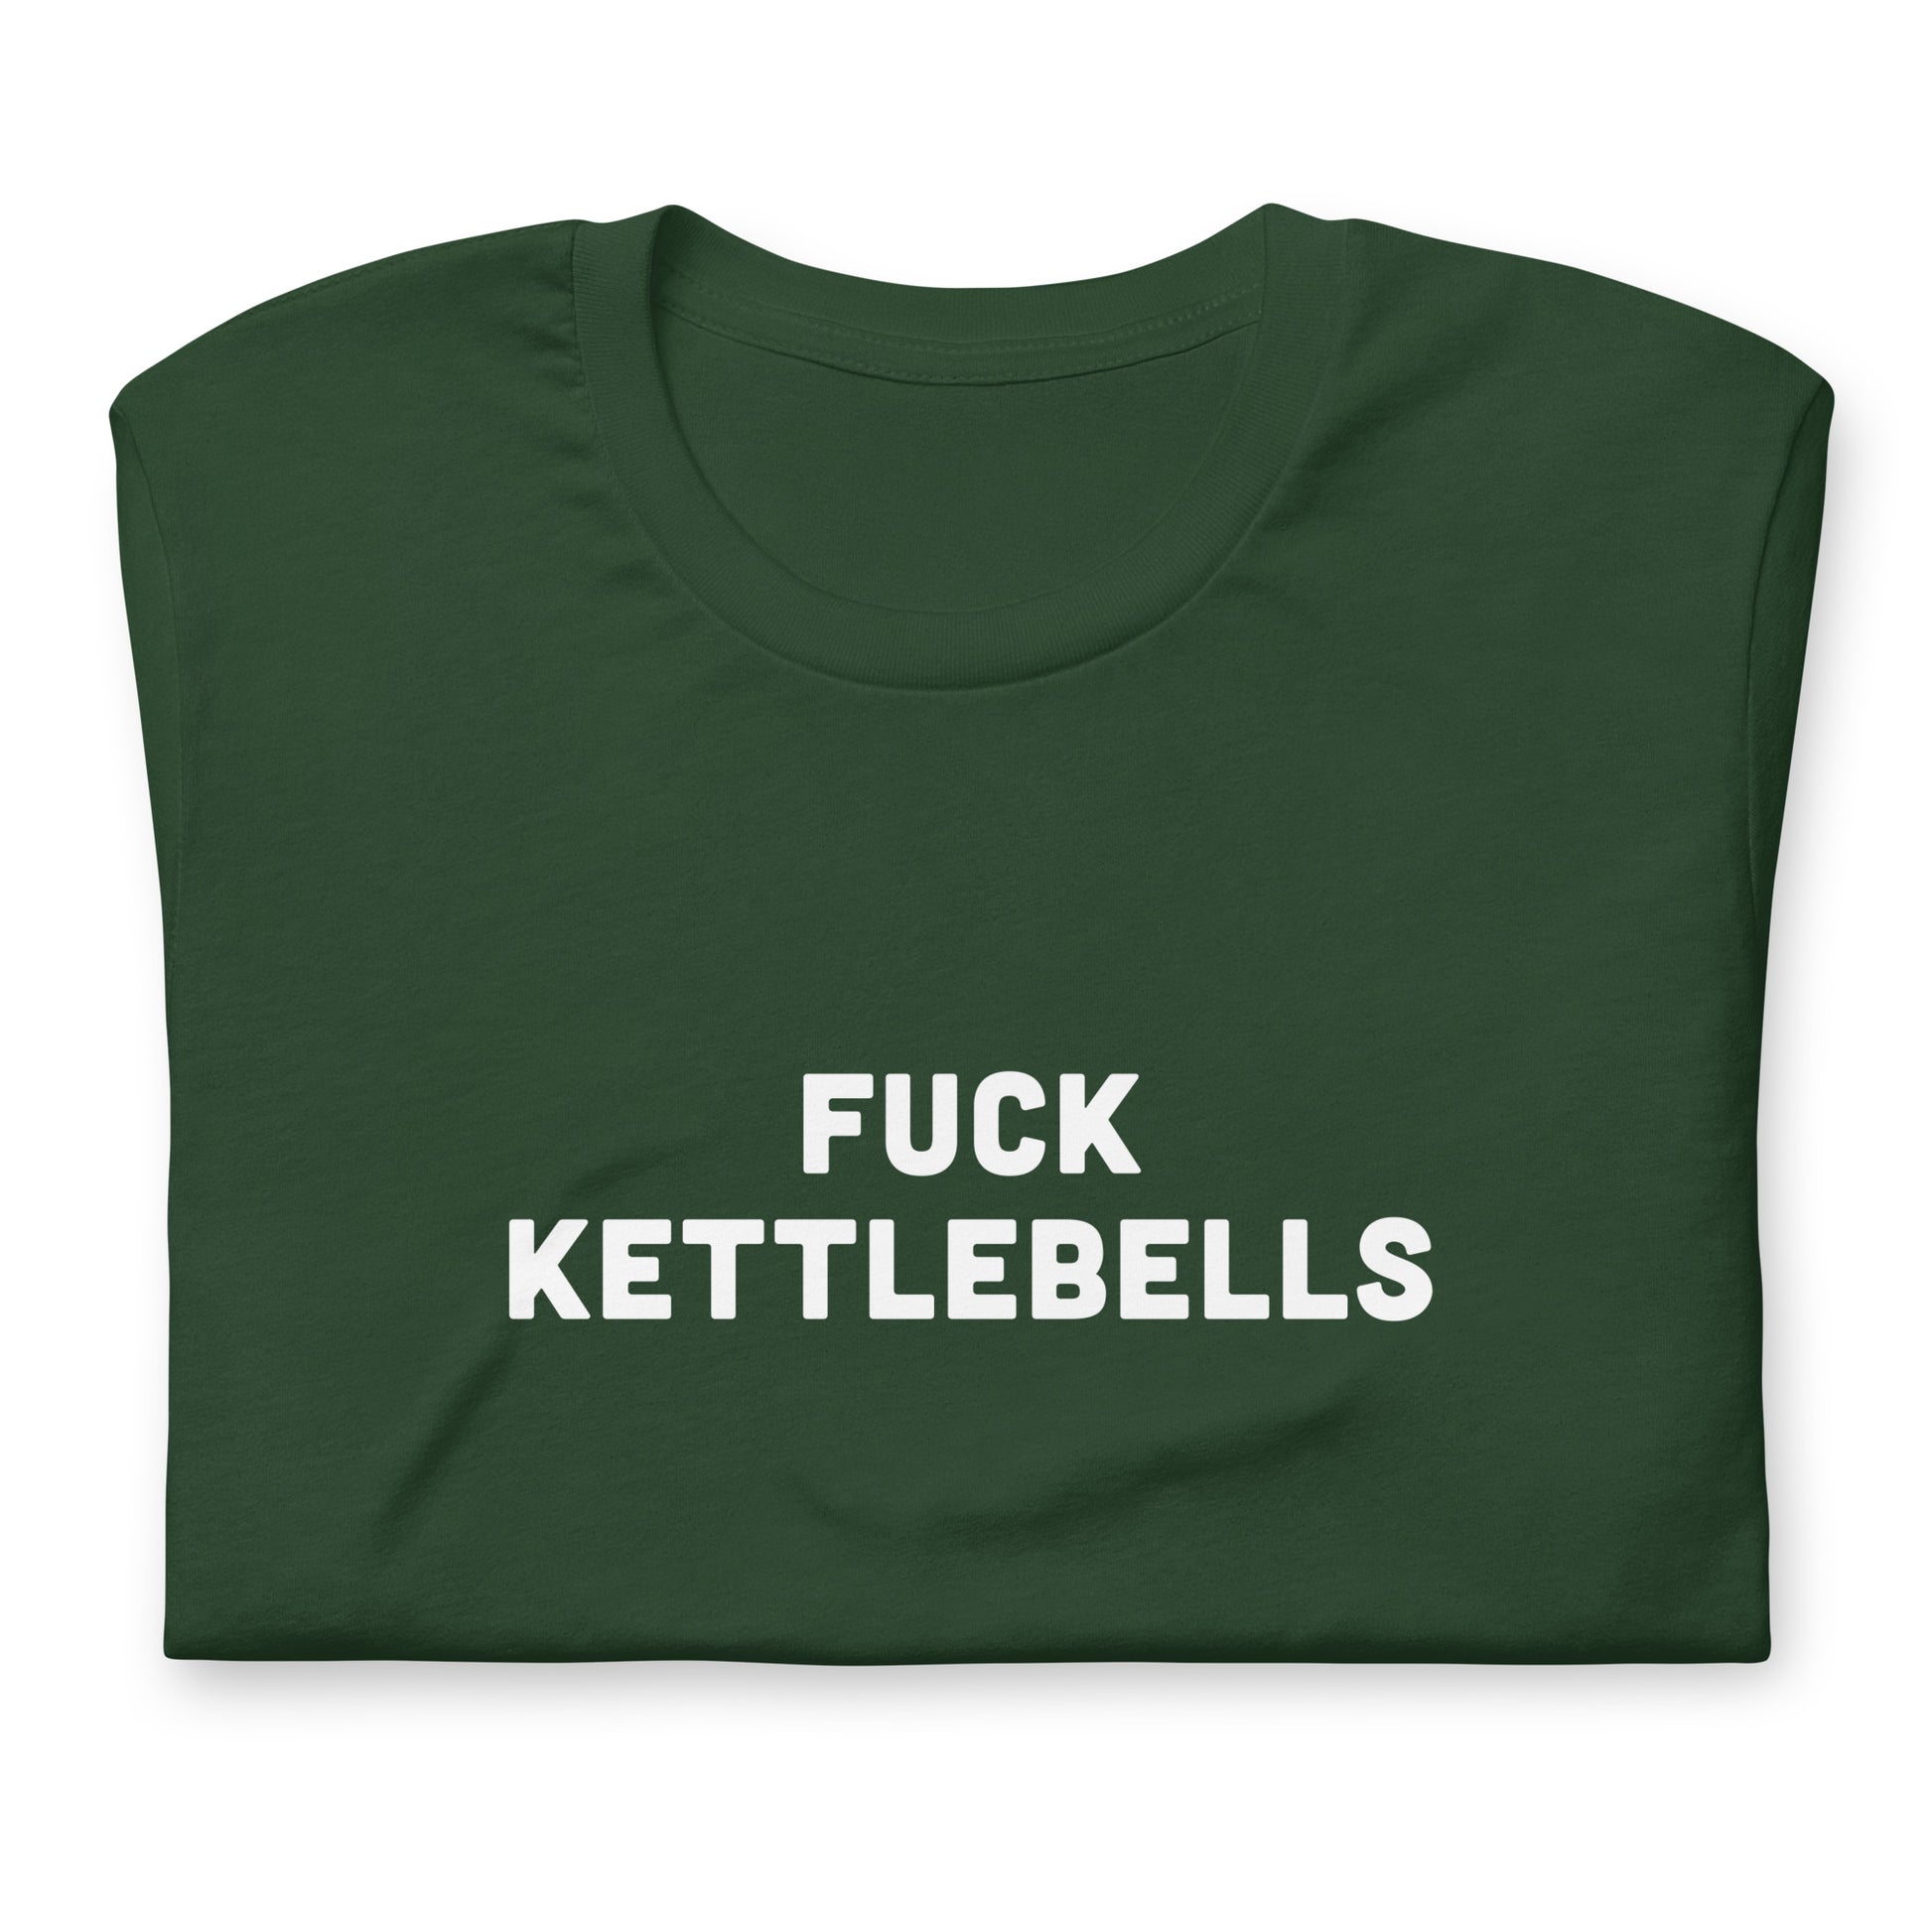 Fuck Kettlebells T-Shirt Size XL Color Black